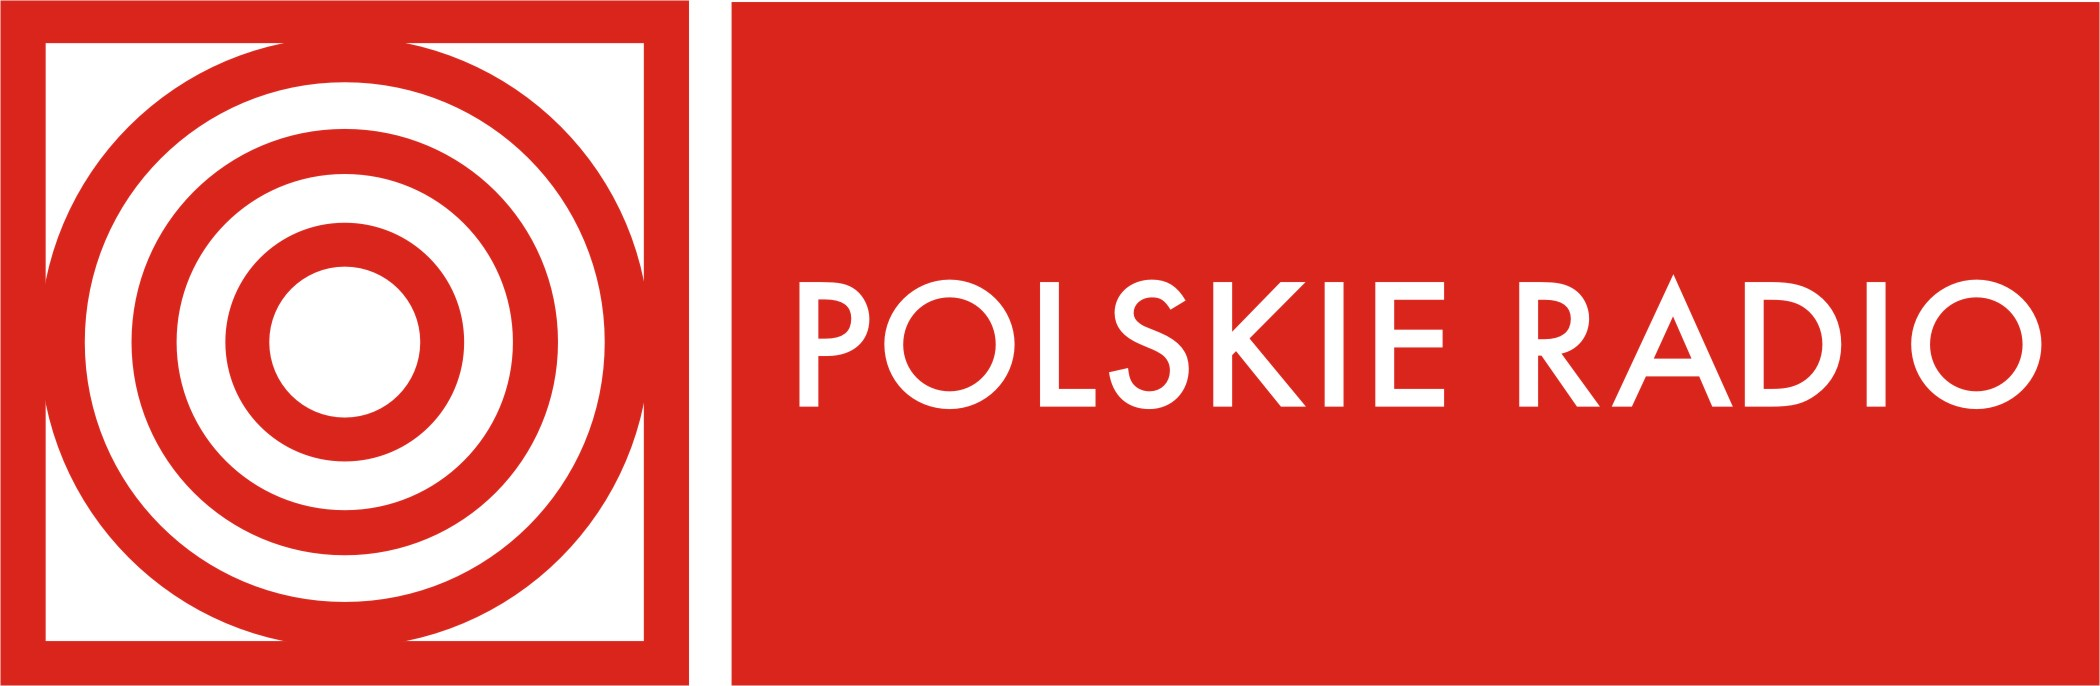 Polskie_radio_logo